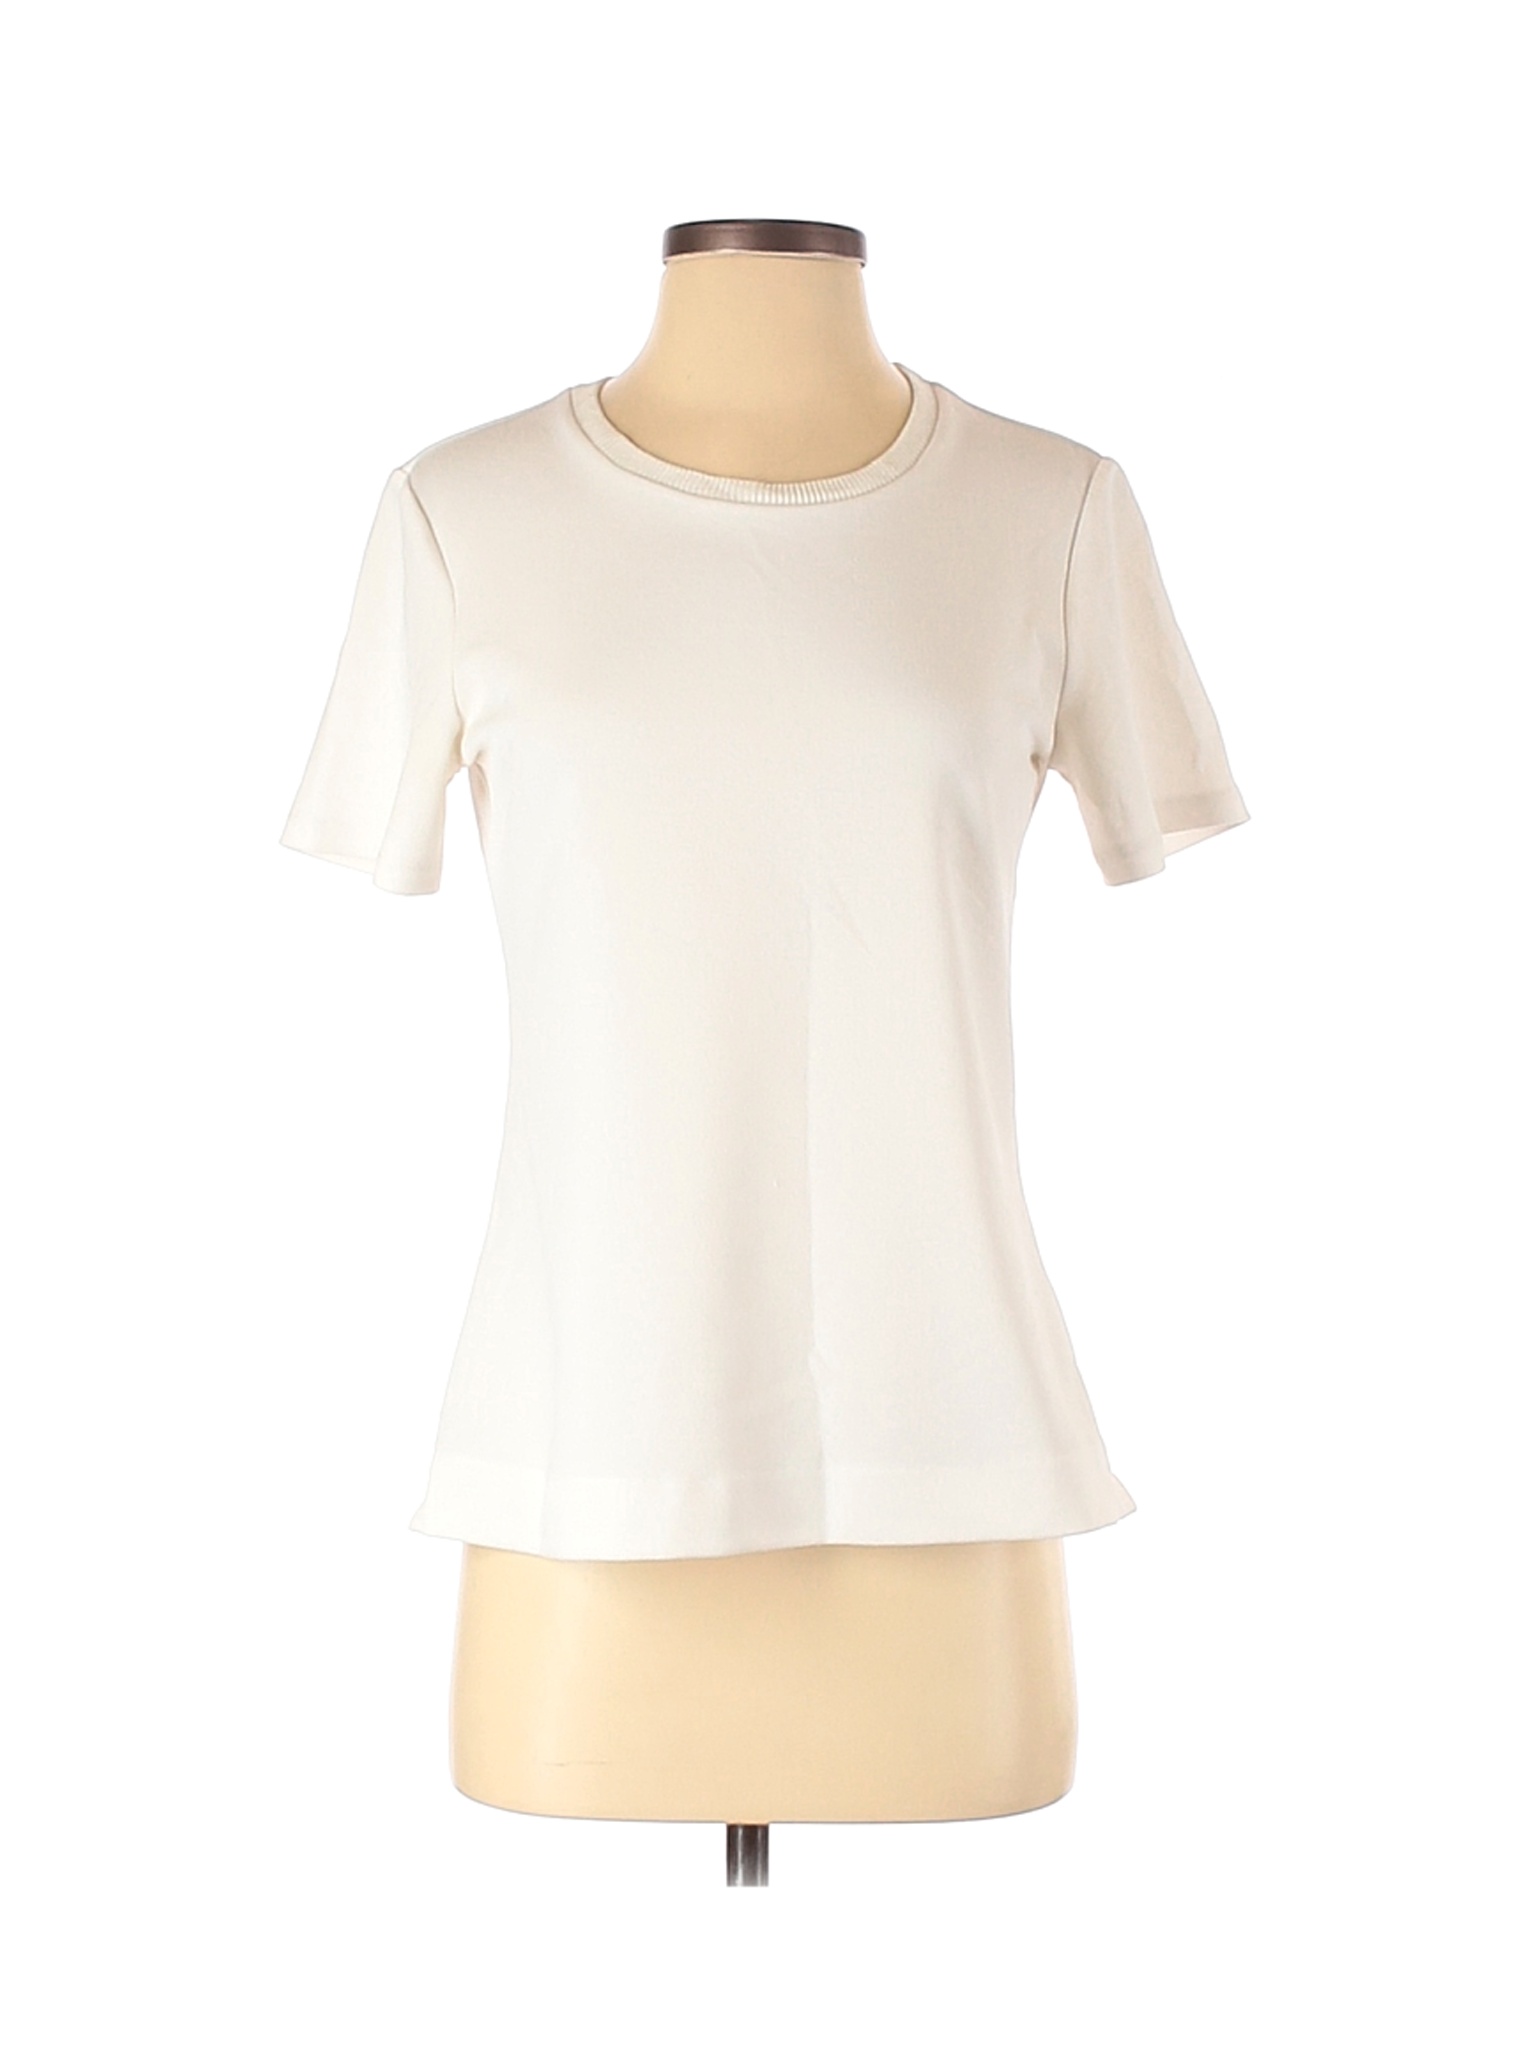 Banana Republic Women White Short Sleeve Top S | eBay